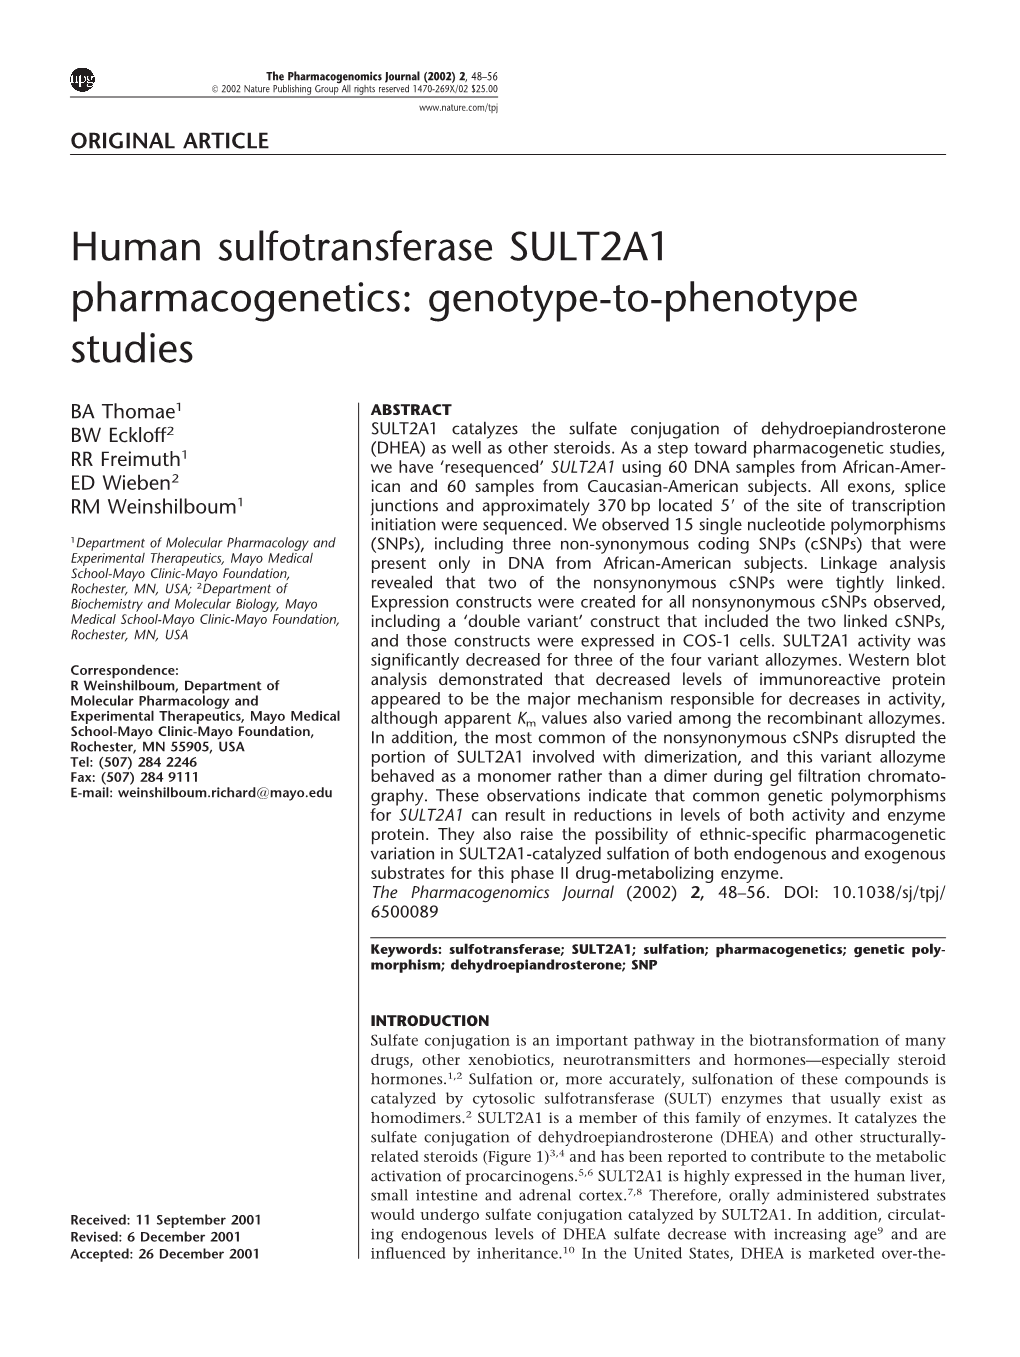 Human Sulfotransferase SULT2A1 Pharmacogenetics: Genotype-To-Phenotype Studies